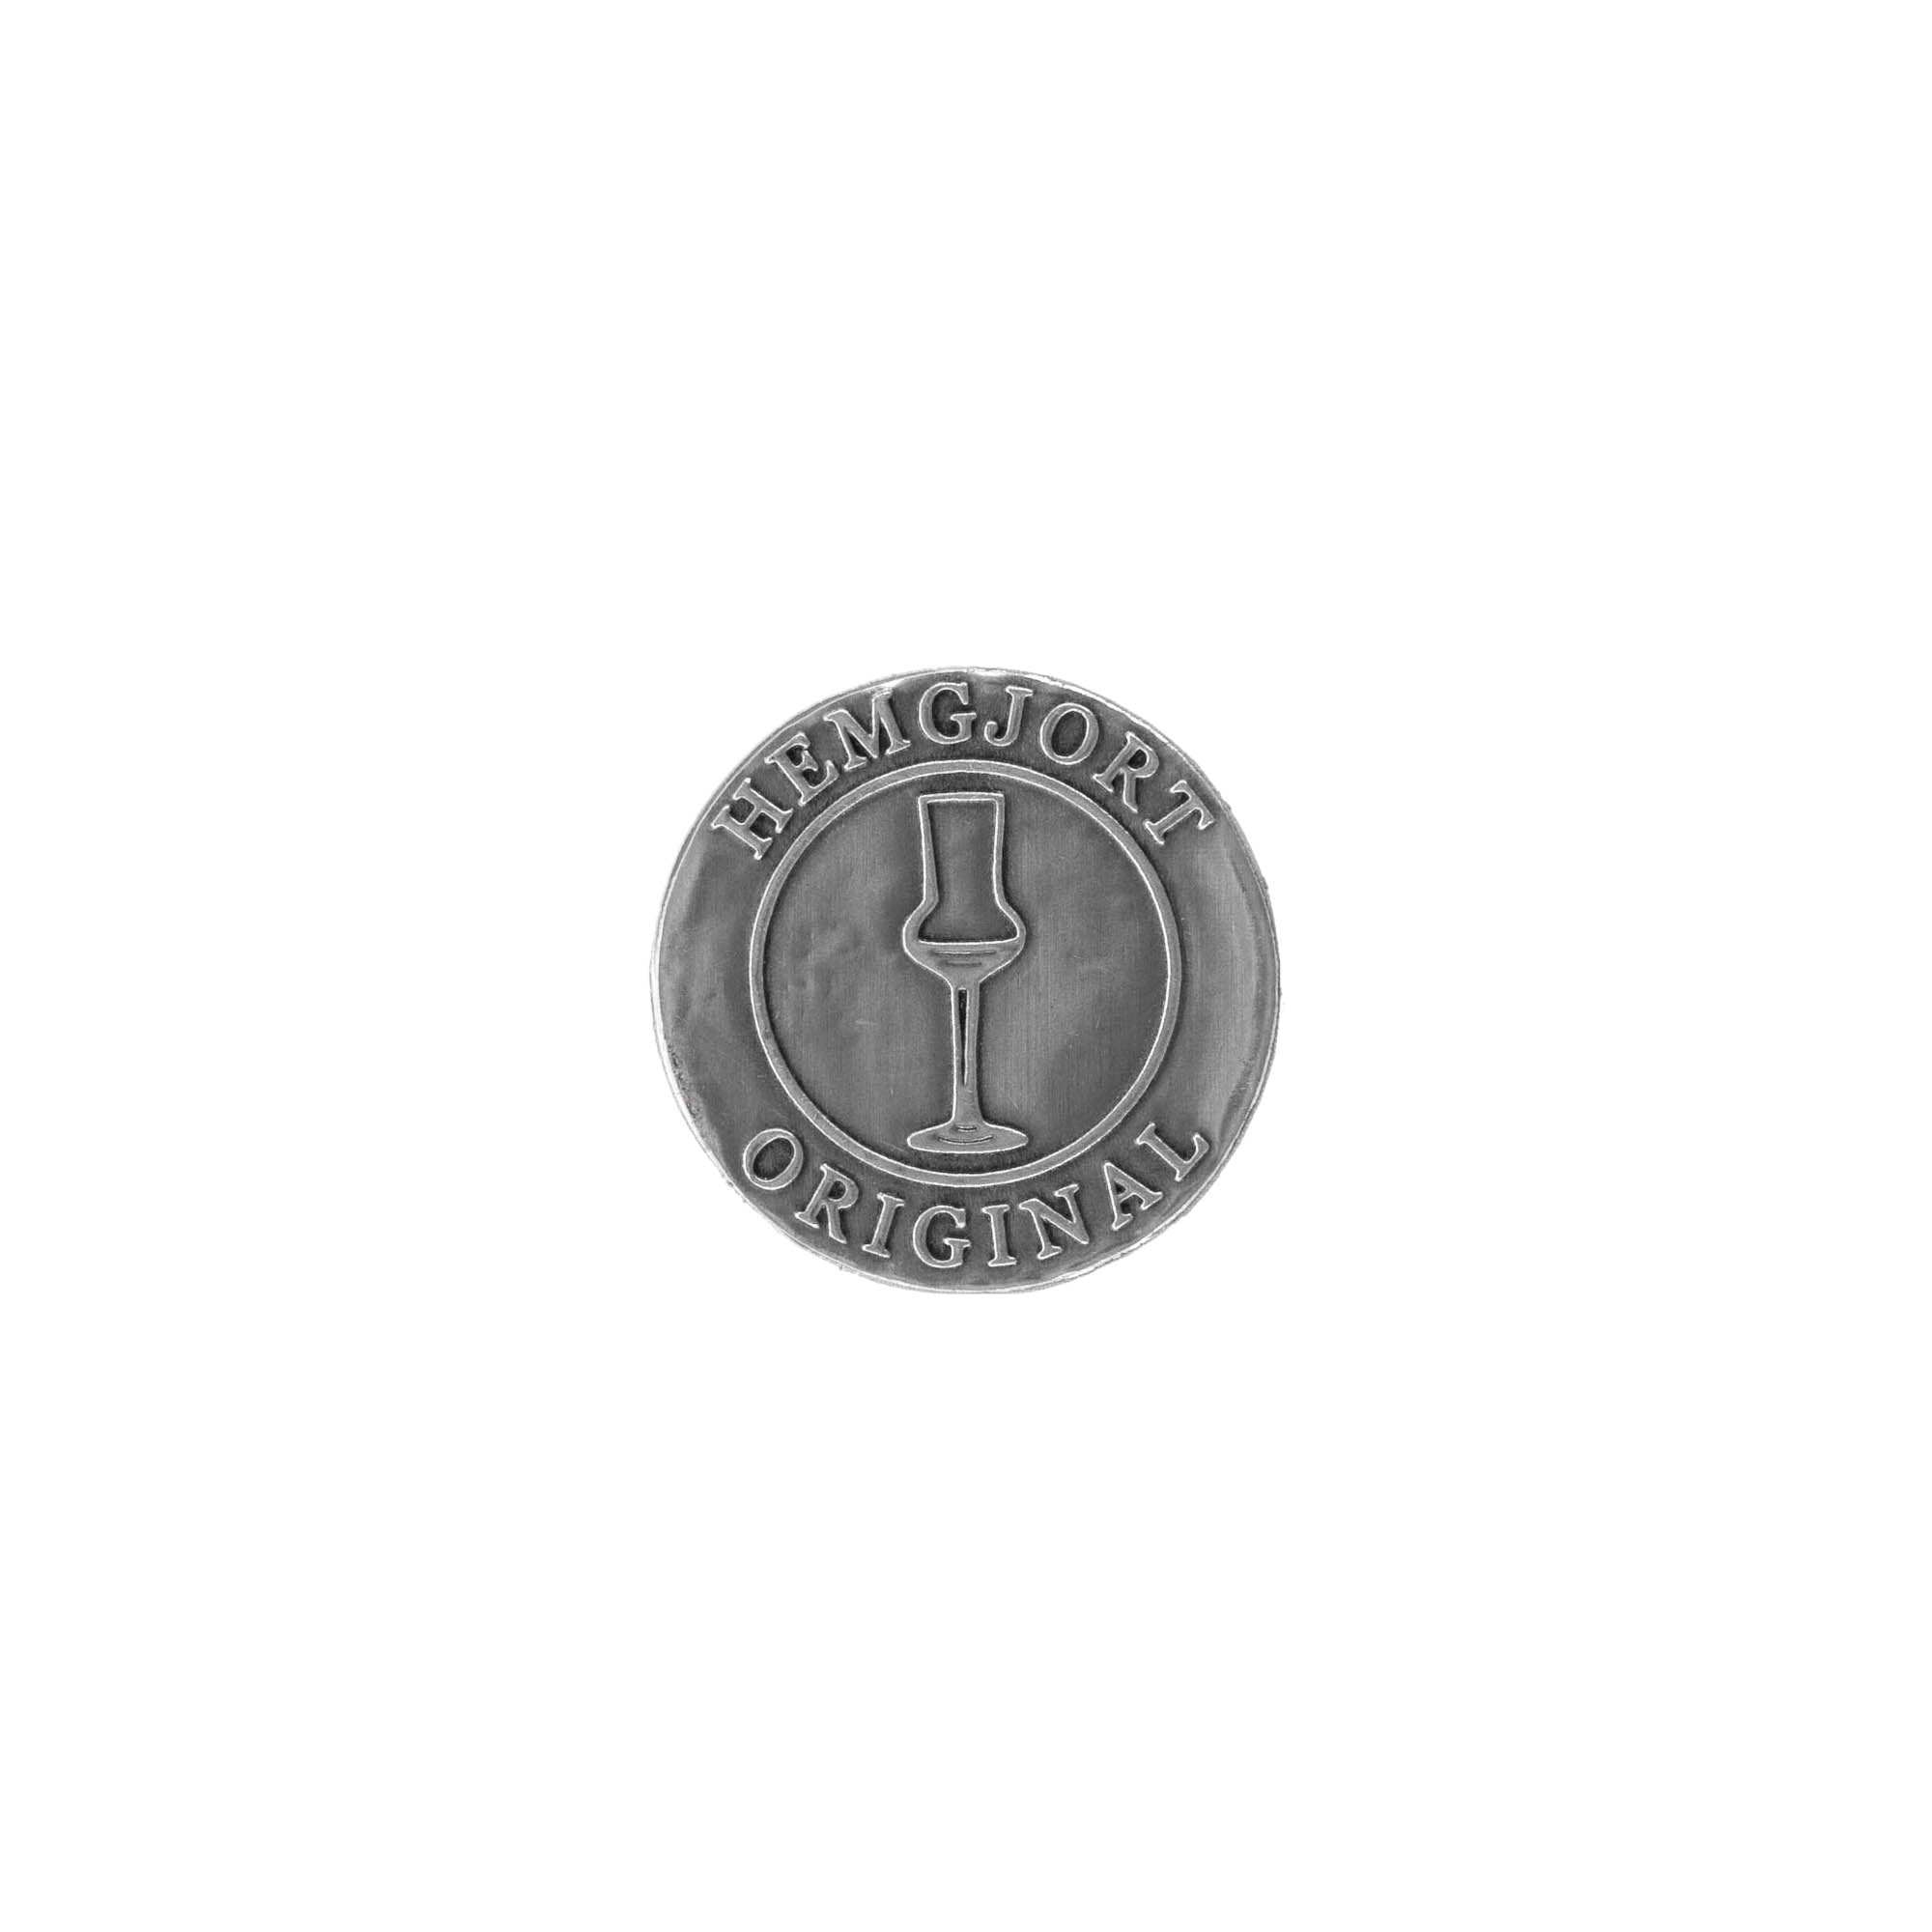 Cínový štítek 'Hemgjort Original', kulatý, kov, stříbrný